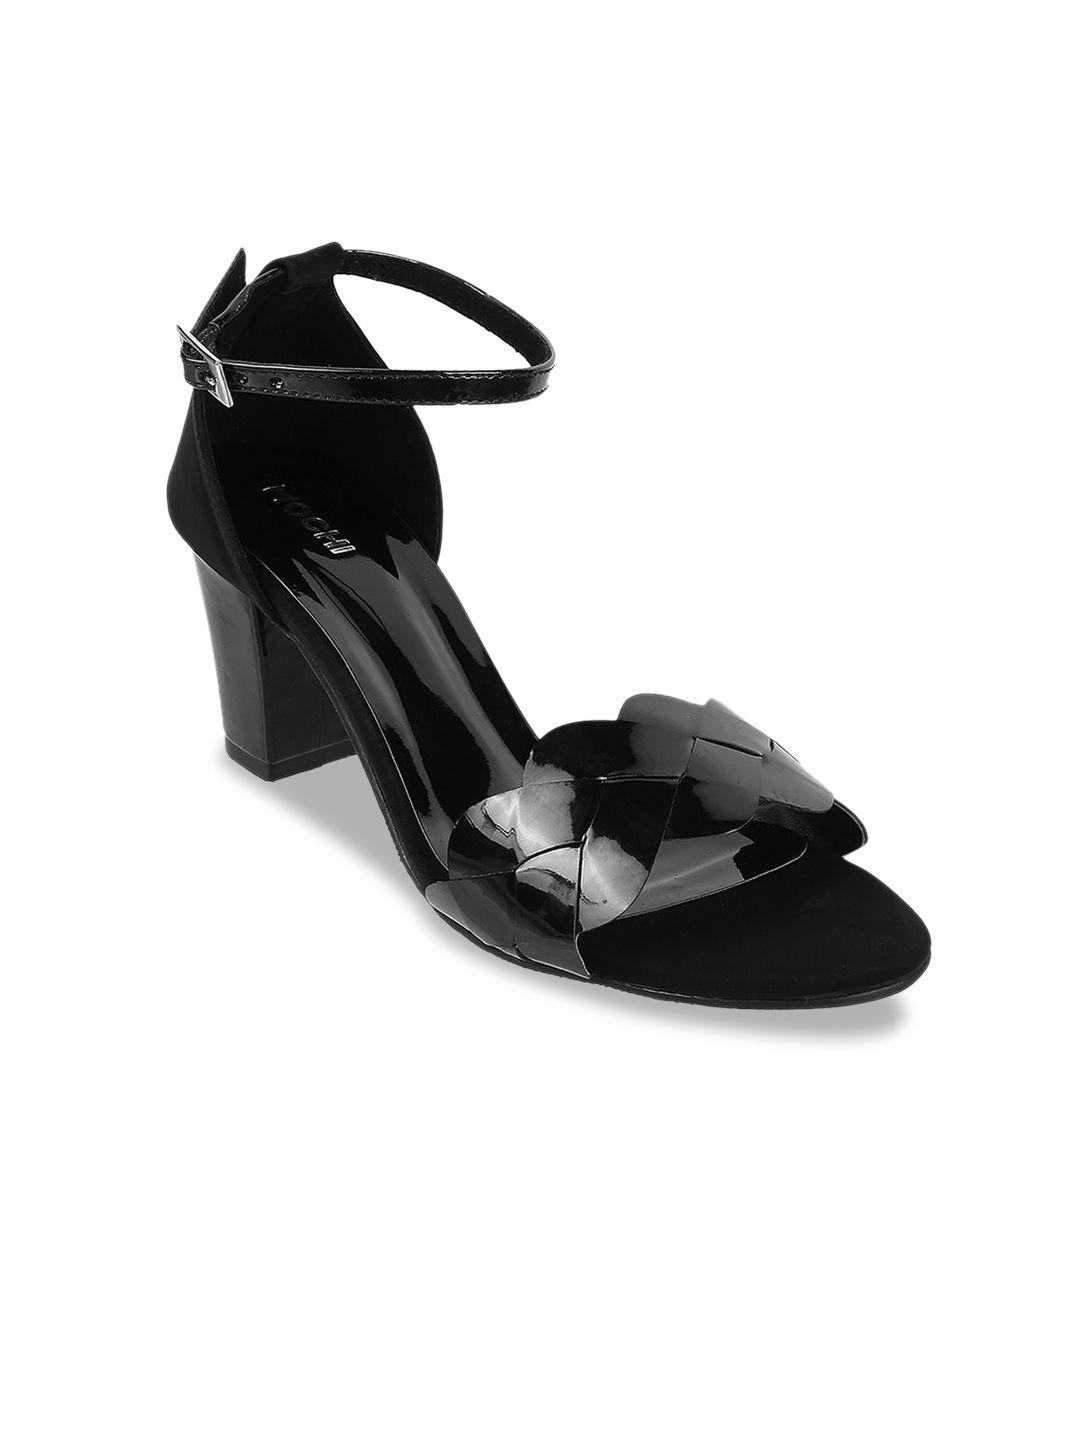 mochi textured open toe block heels with ankle loop